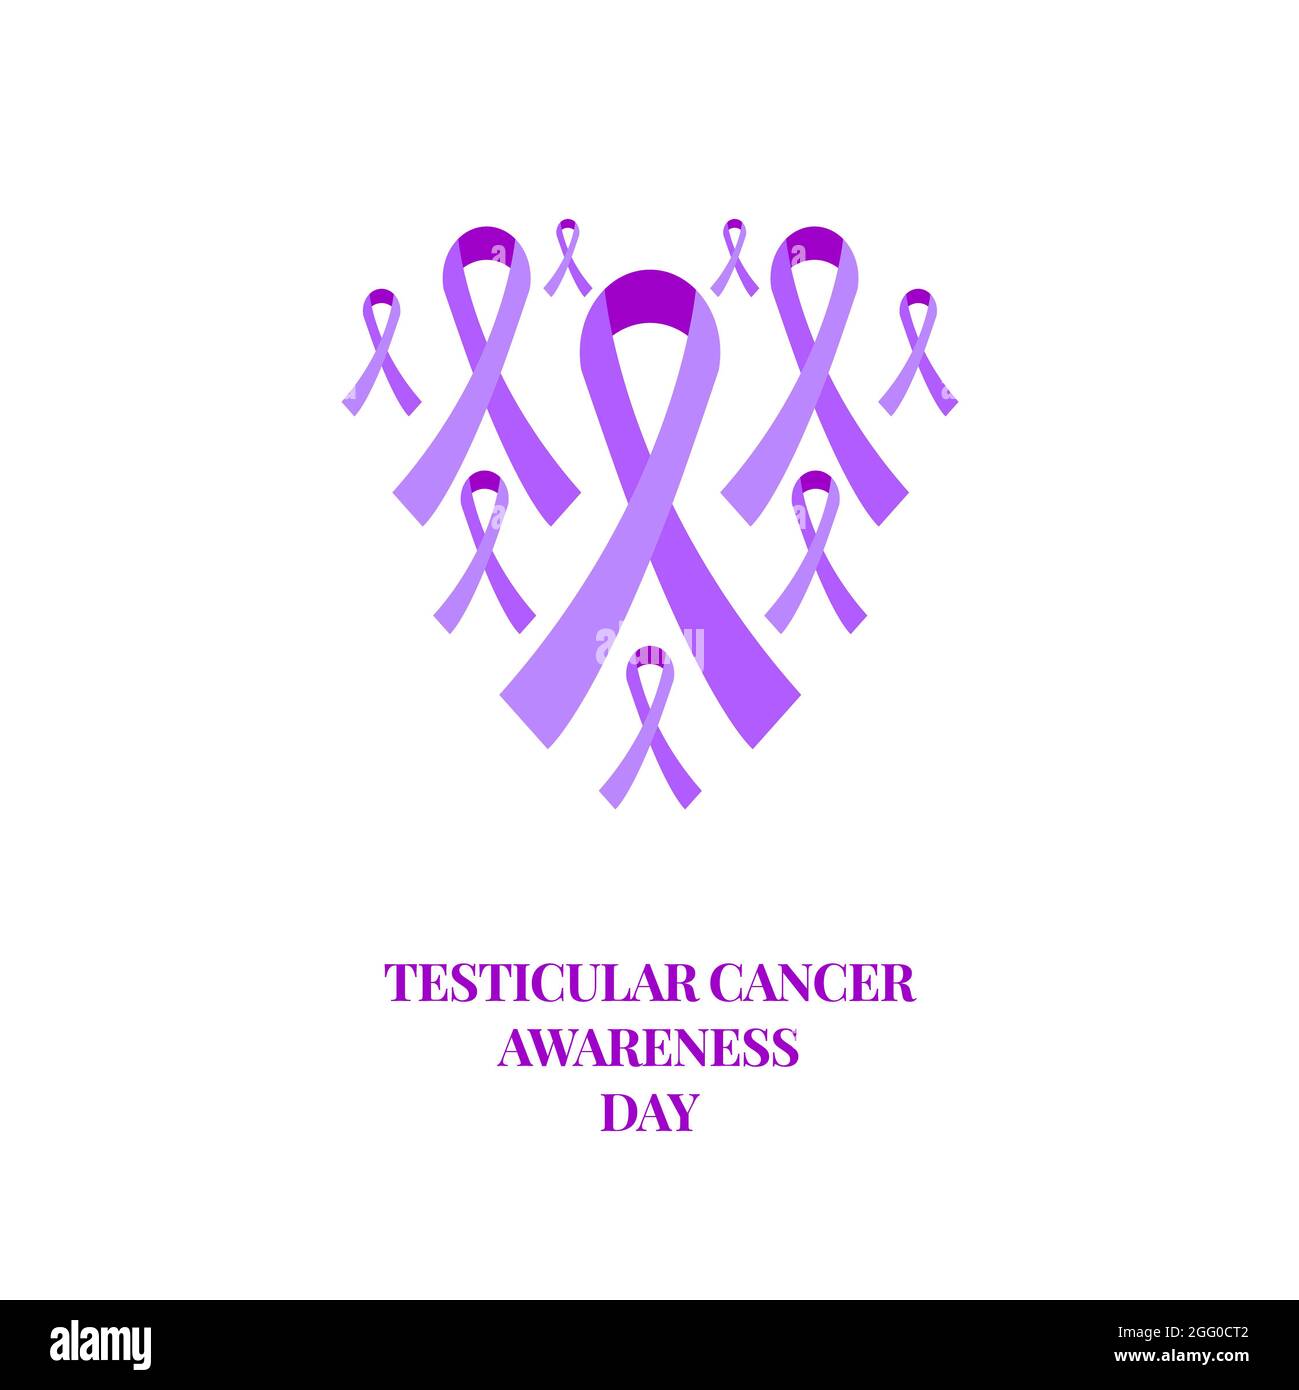 Testicular cancer awareness hi-res stock photography and images - Alamy